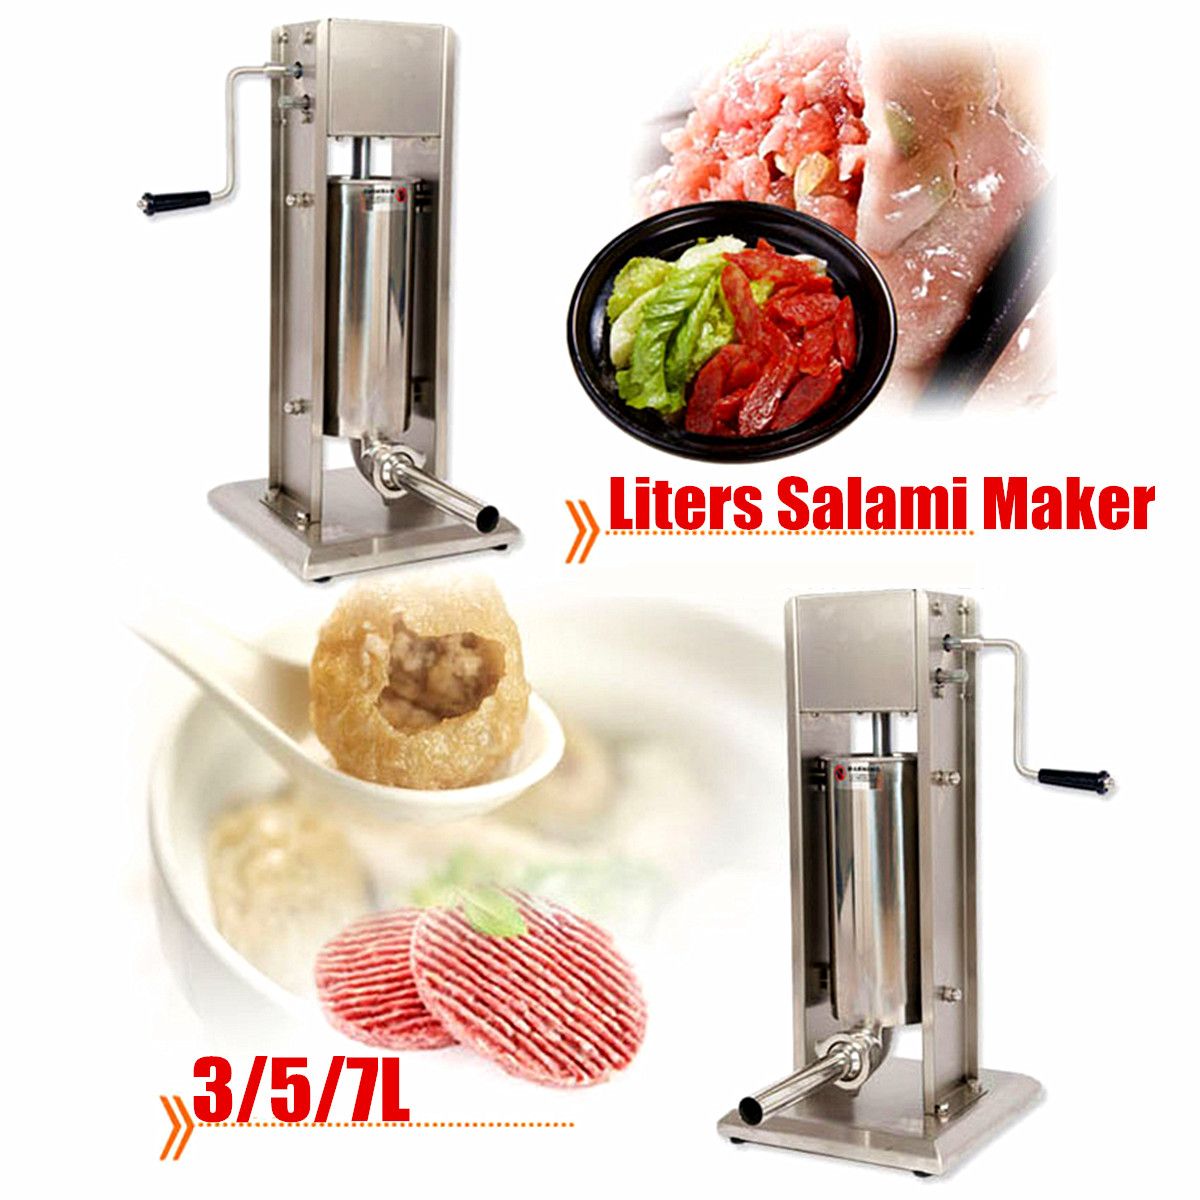 357L-Stainless-Steel-Liters-Salami-Maker-Standard-Meat-Sausage-Filler-Stuffer-Chopper-1385224